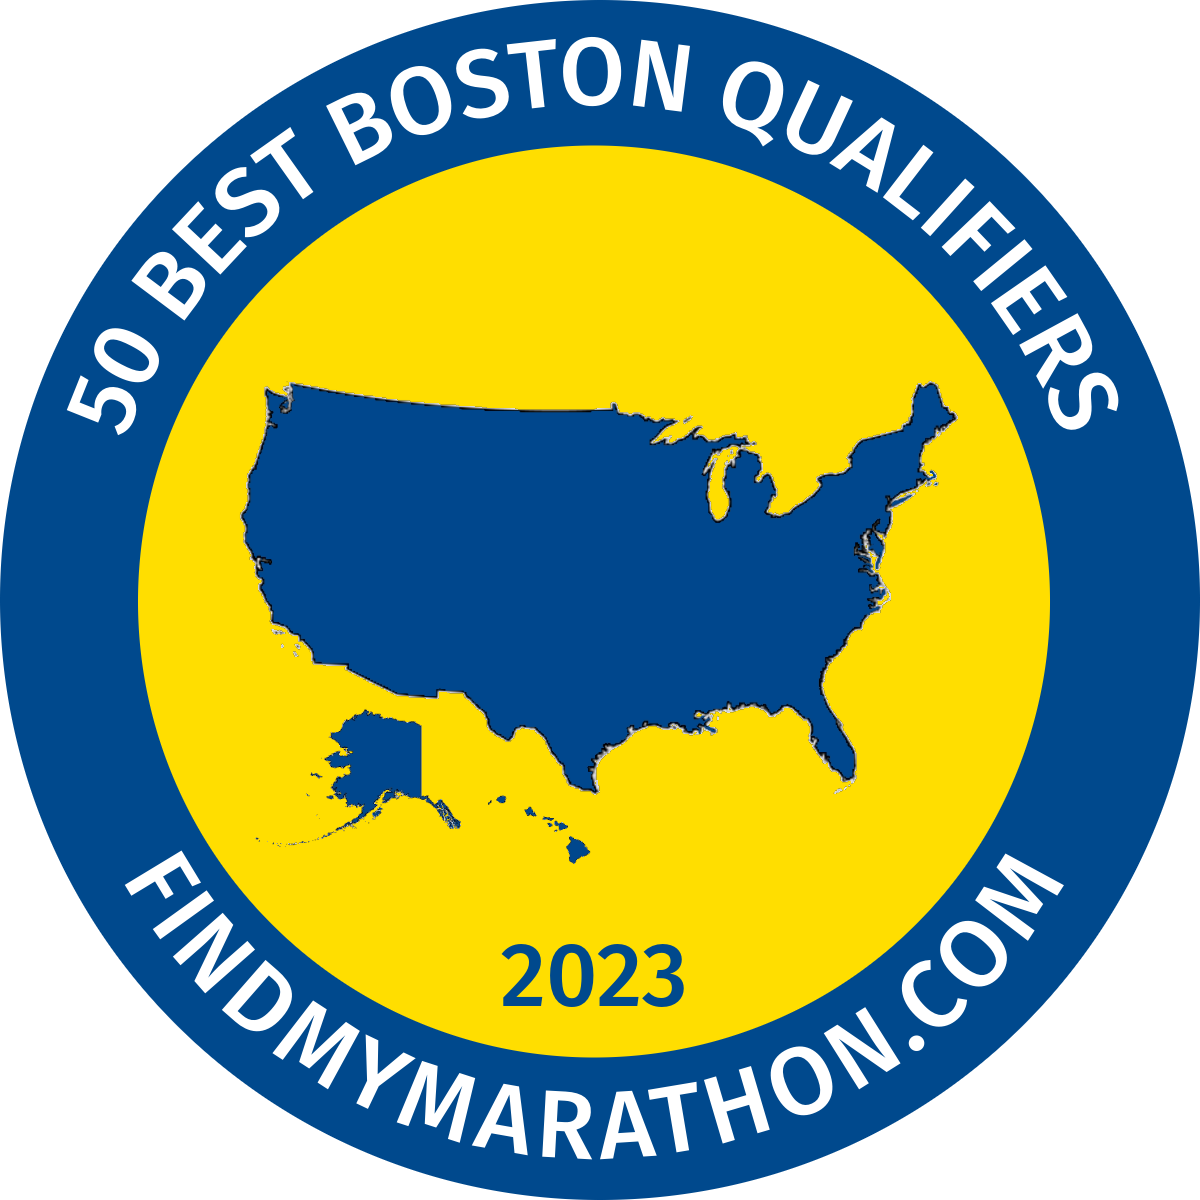 Top 50 Boston Qualifying Races of 2023